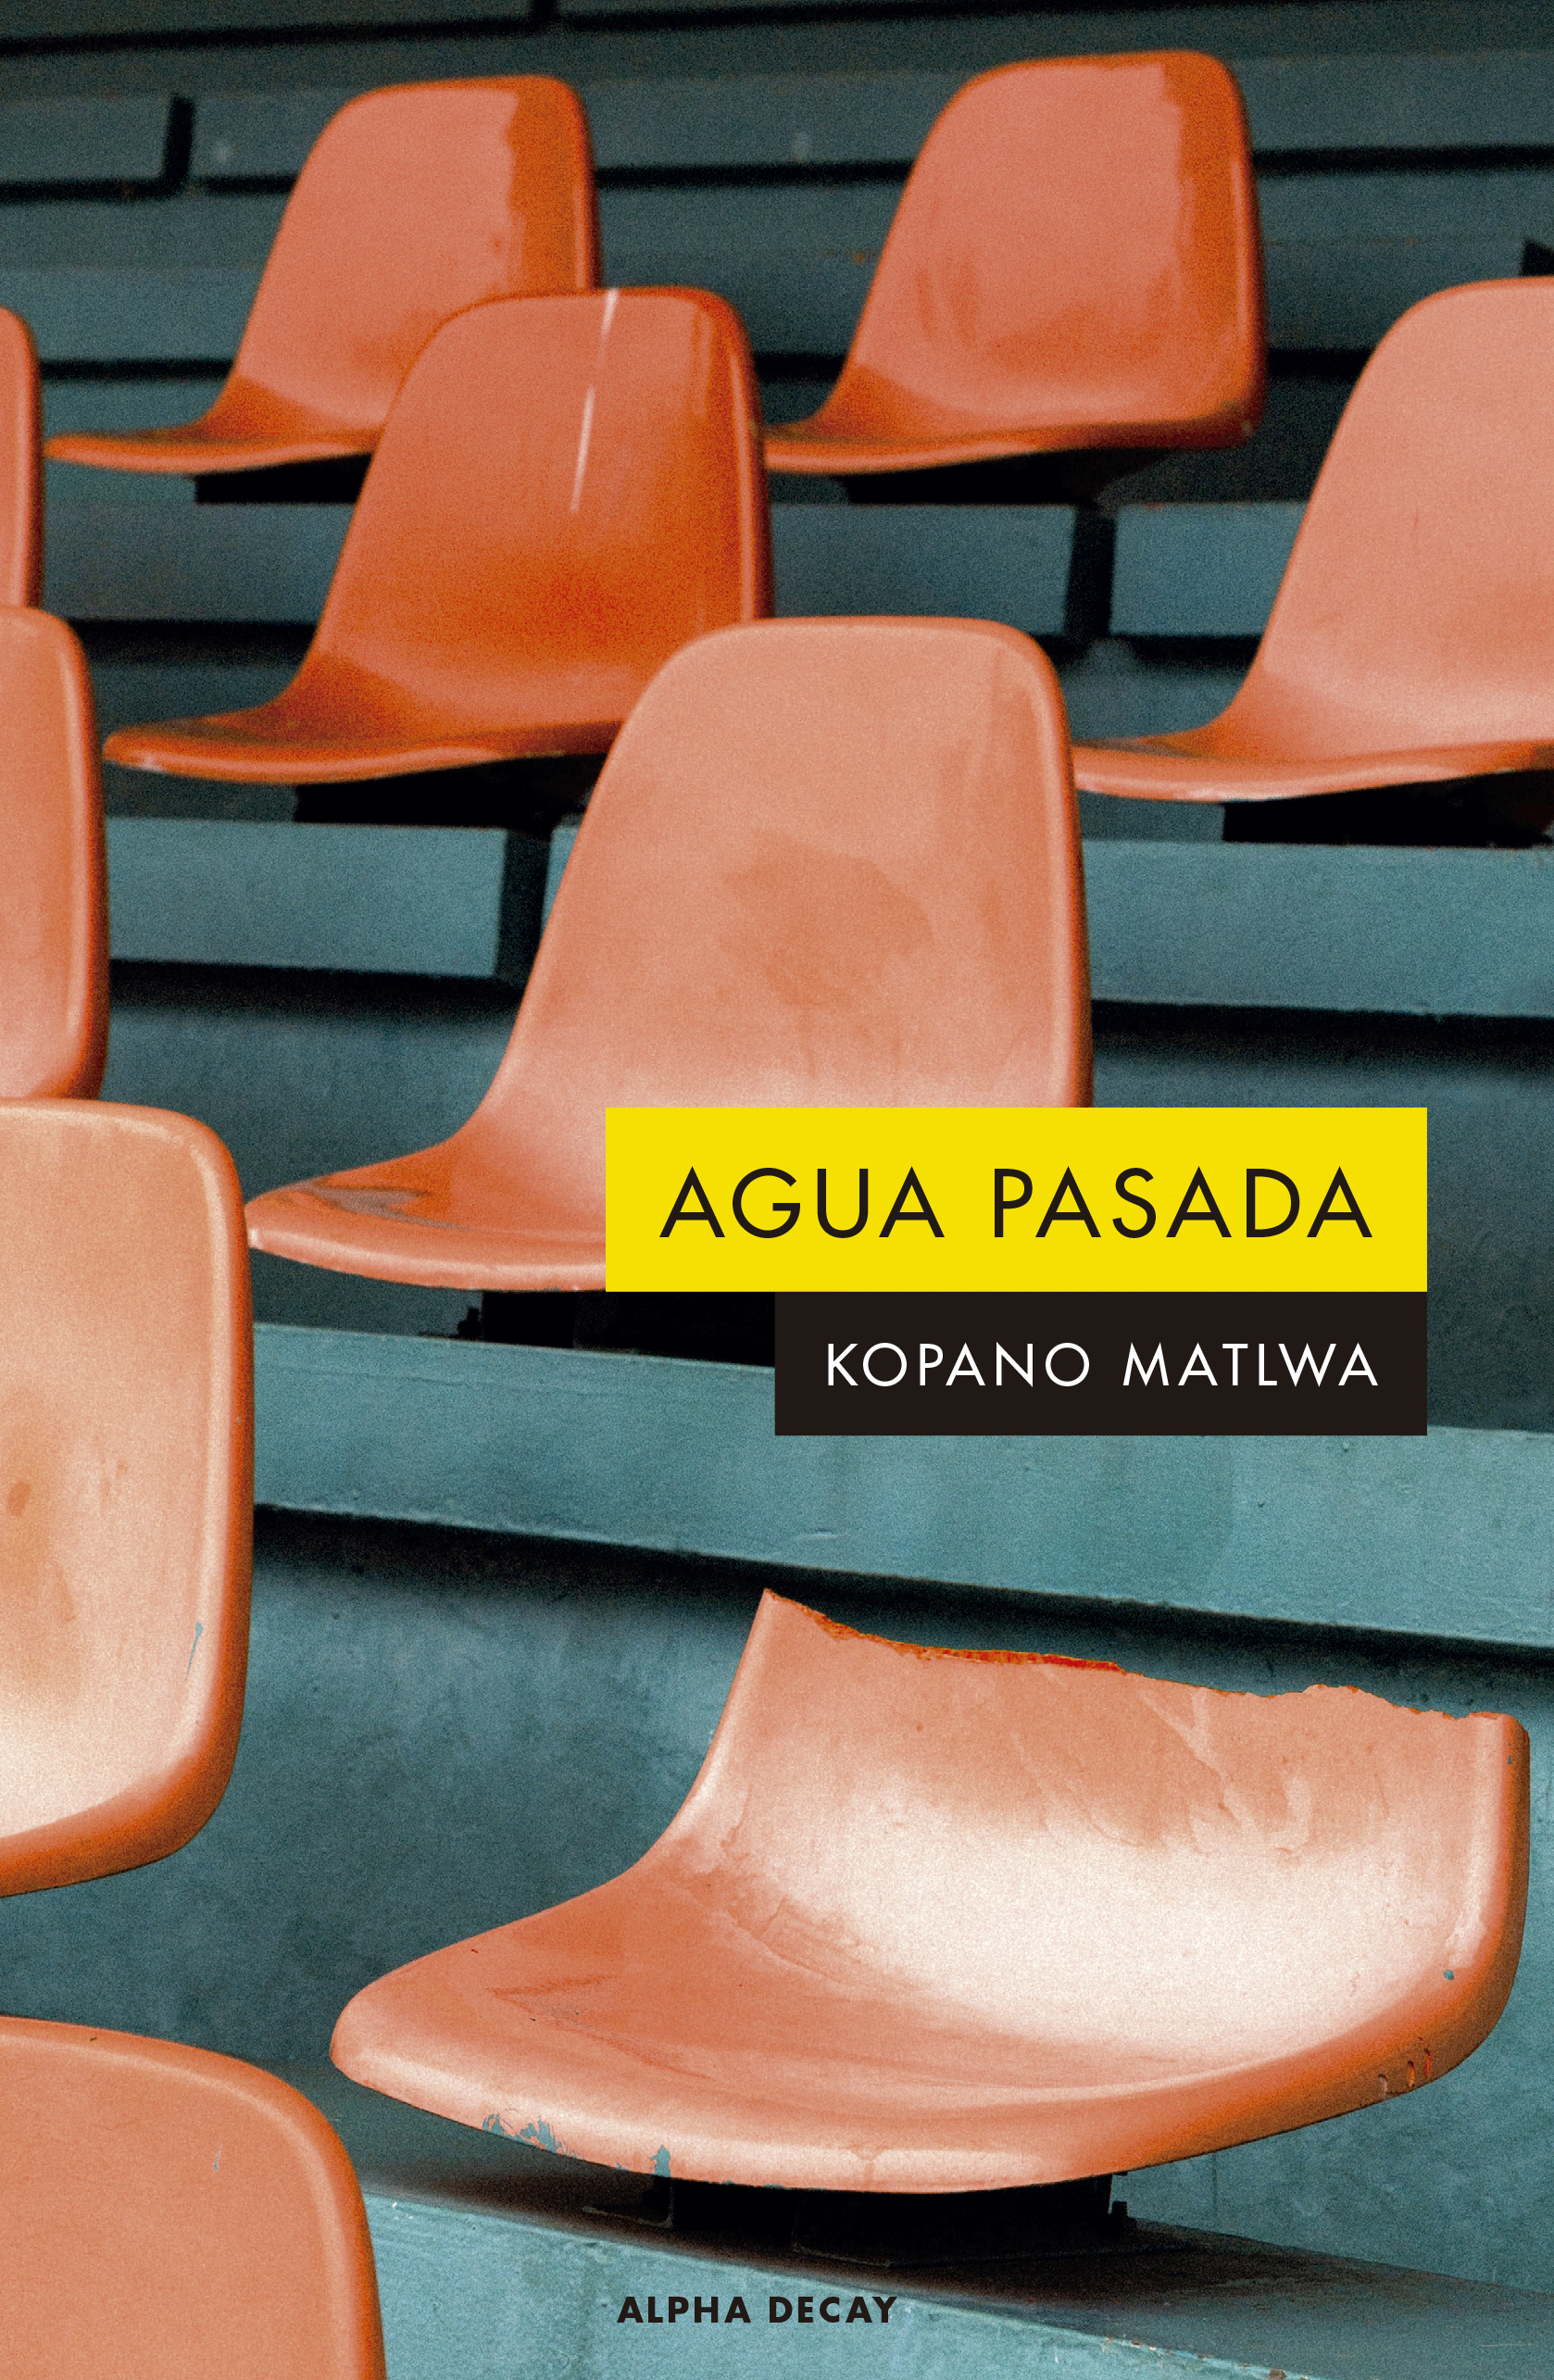 Portada de la novela "Agua pasada", de Kopano Matlwa